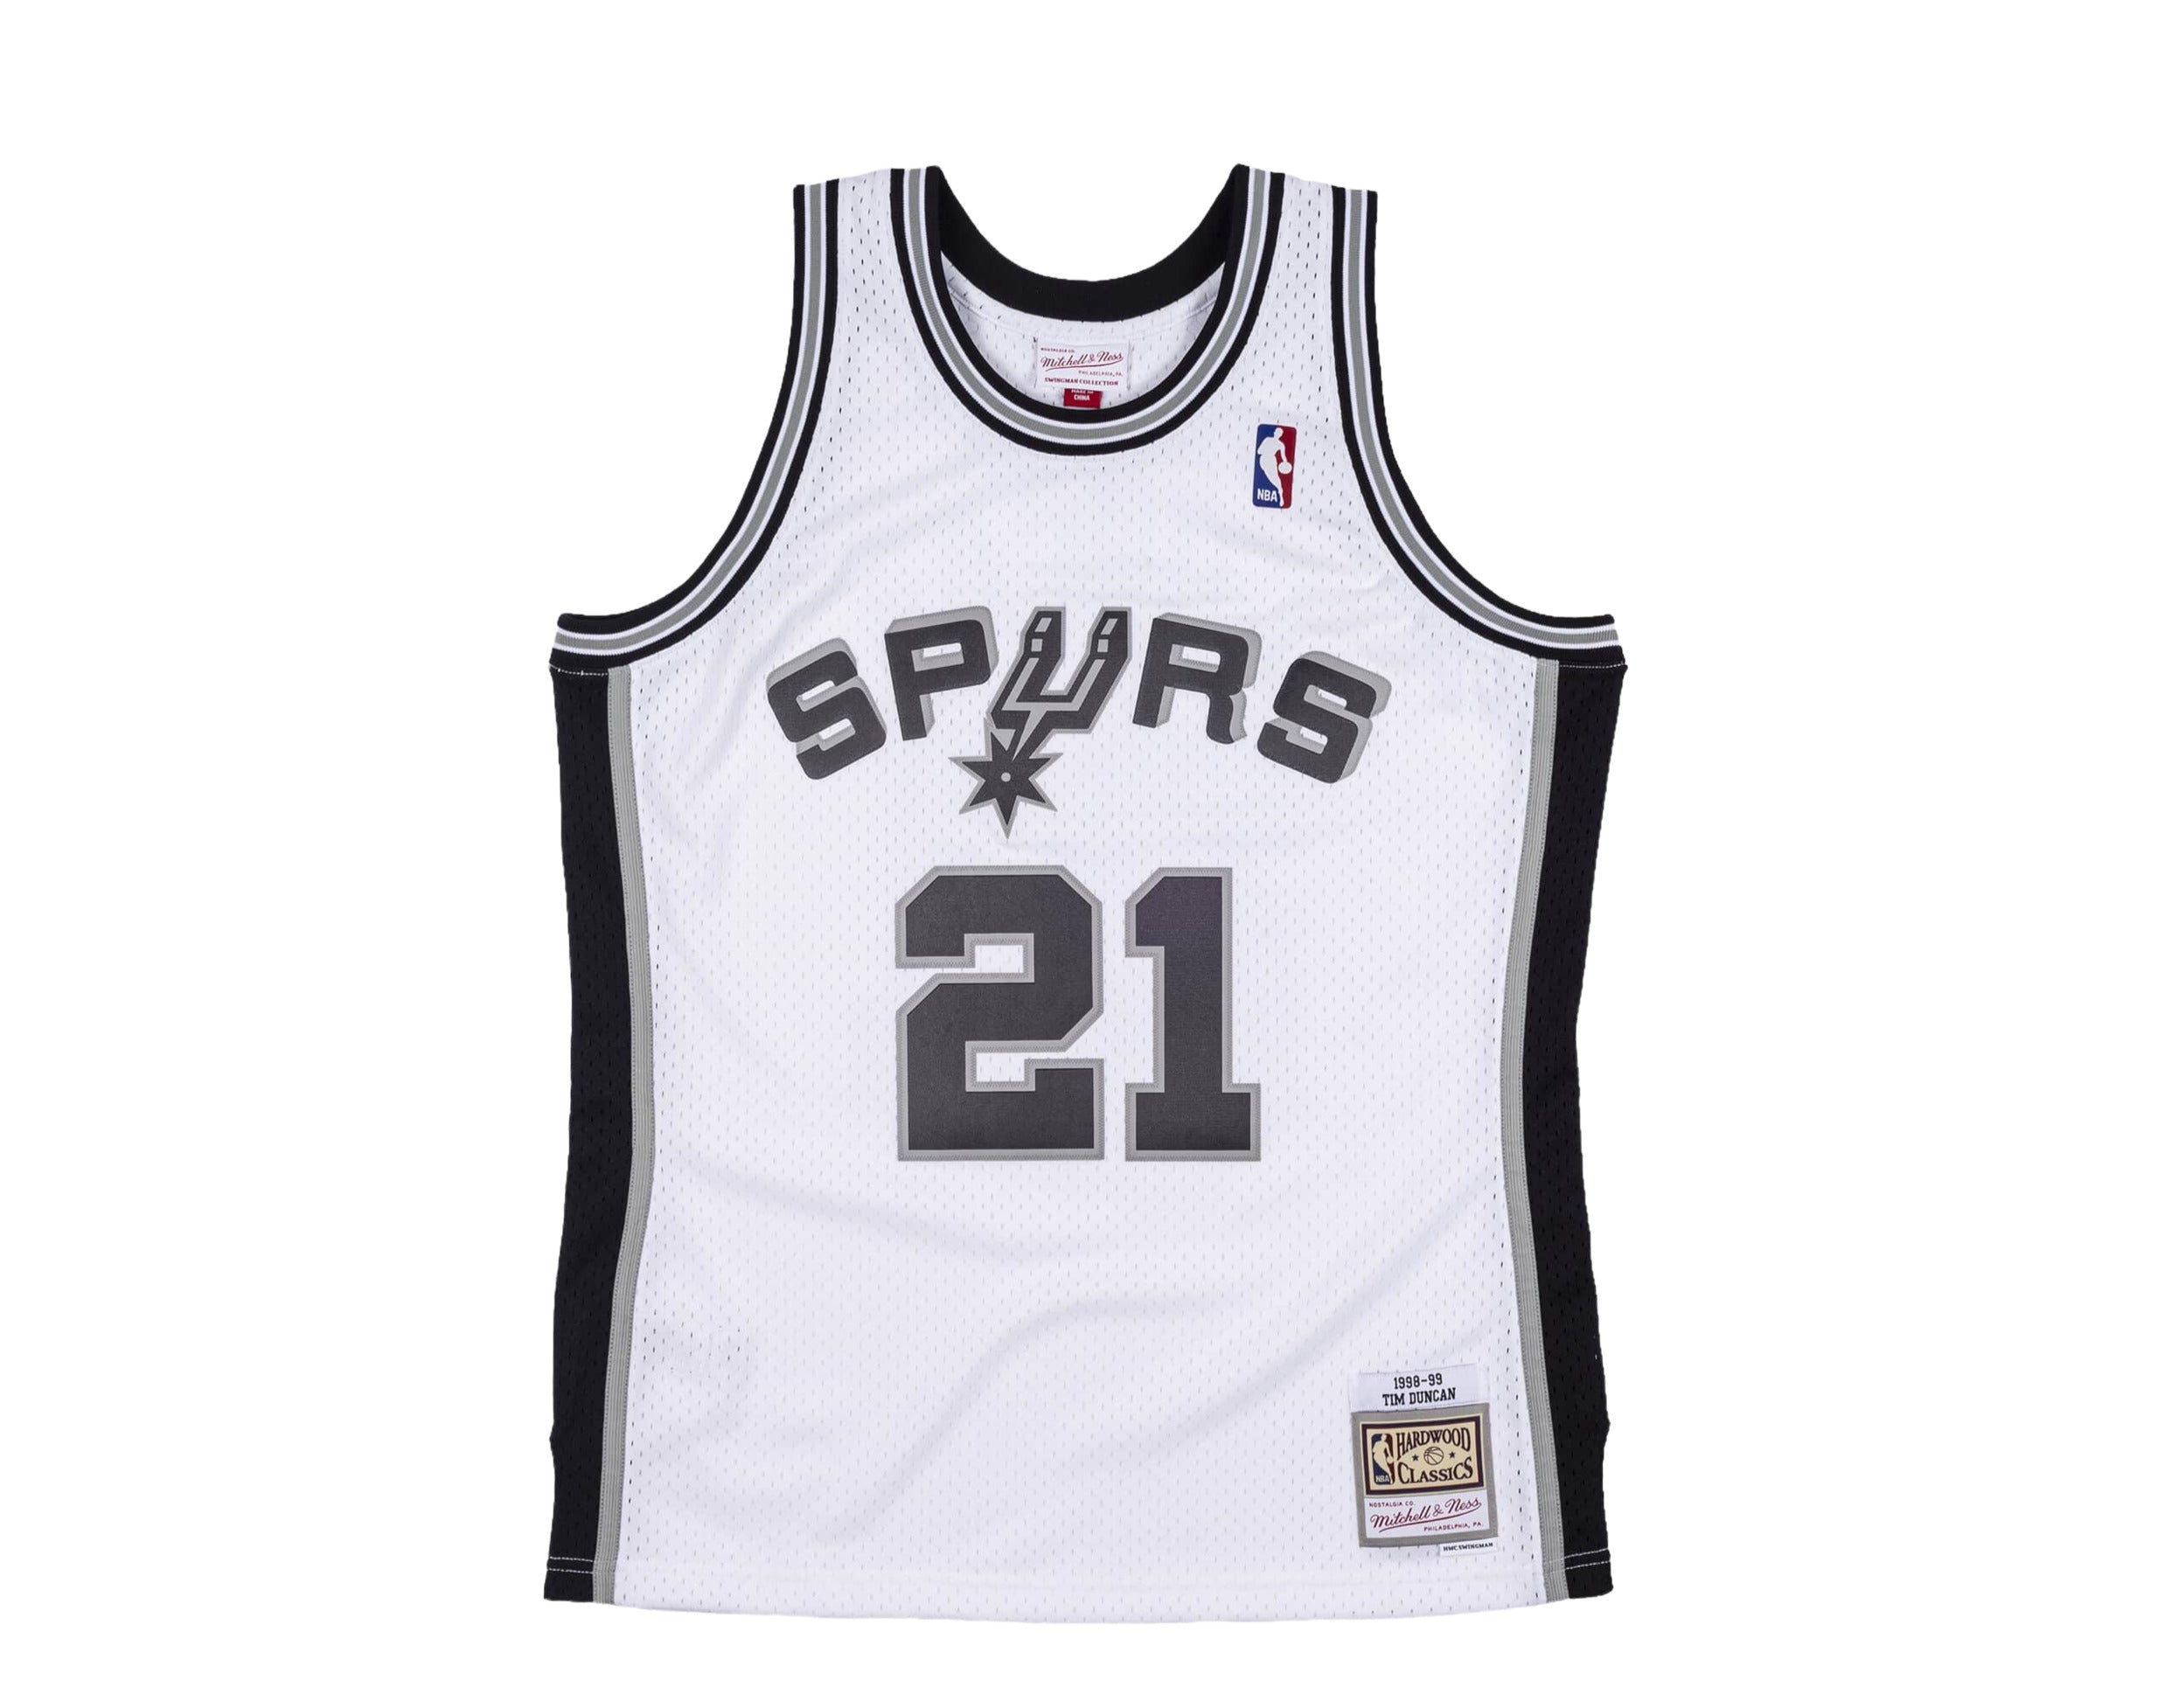 Mitchell & Ness Men's San Antonio Spurs Reload Player T-Shirt Tim